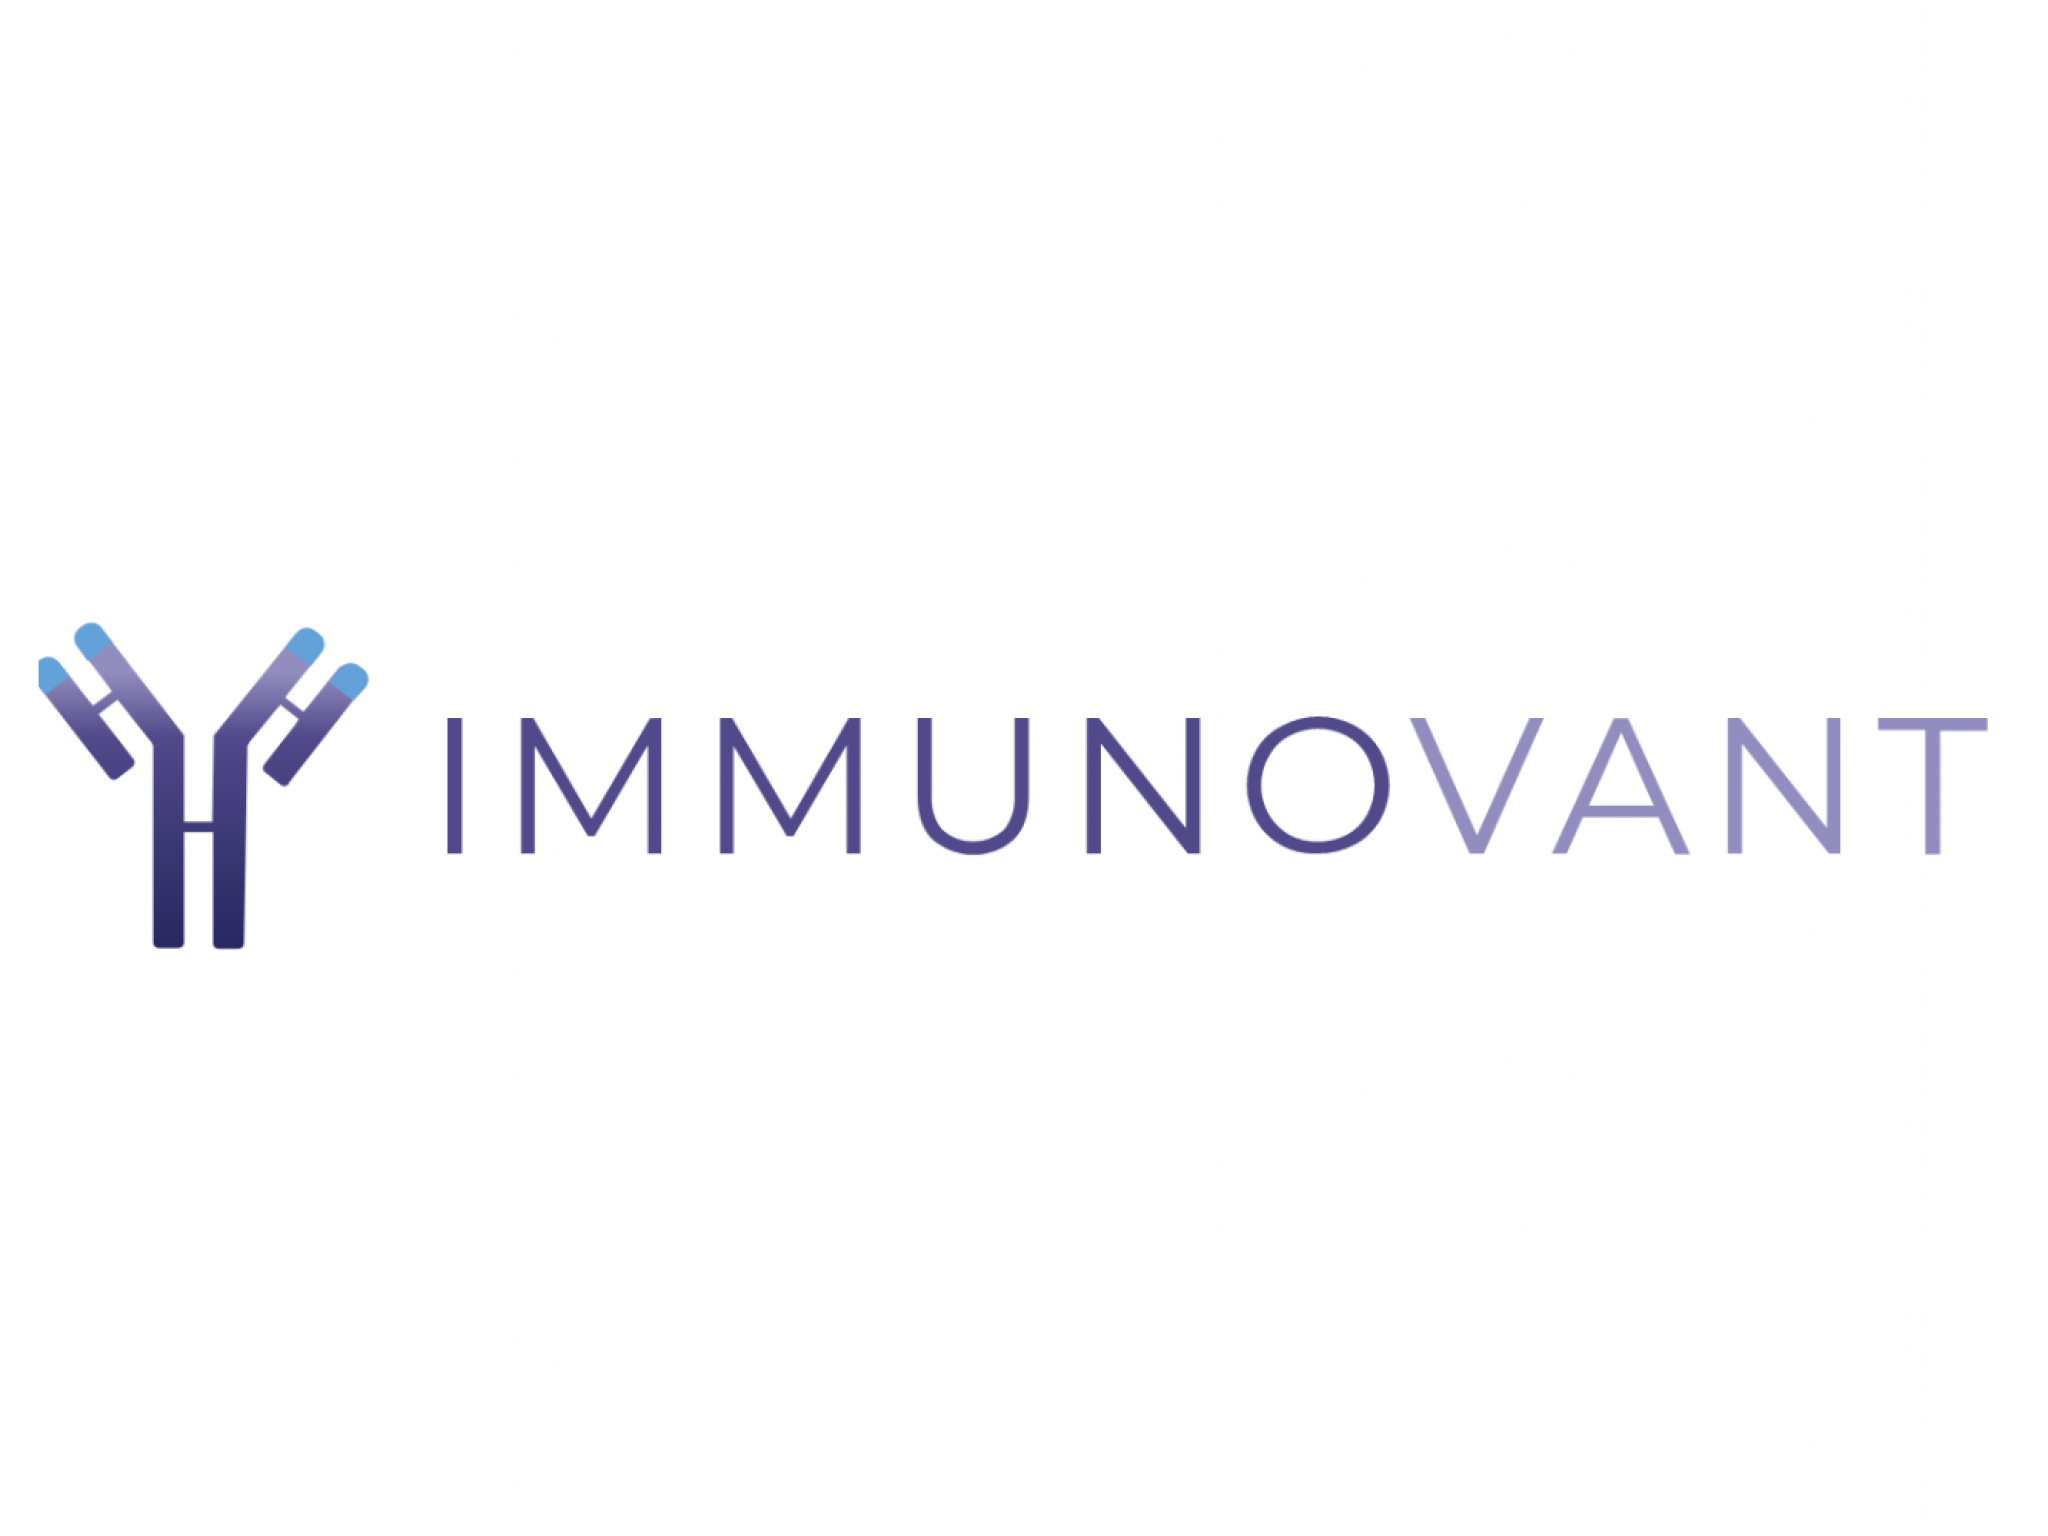  autoimmune-disease-player-immunovants-investigational-drug-for-immune-system-disorder-shows-response-rates-of-over-50 